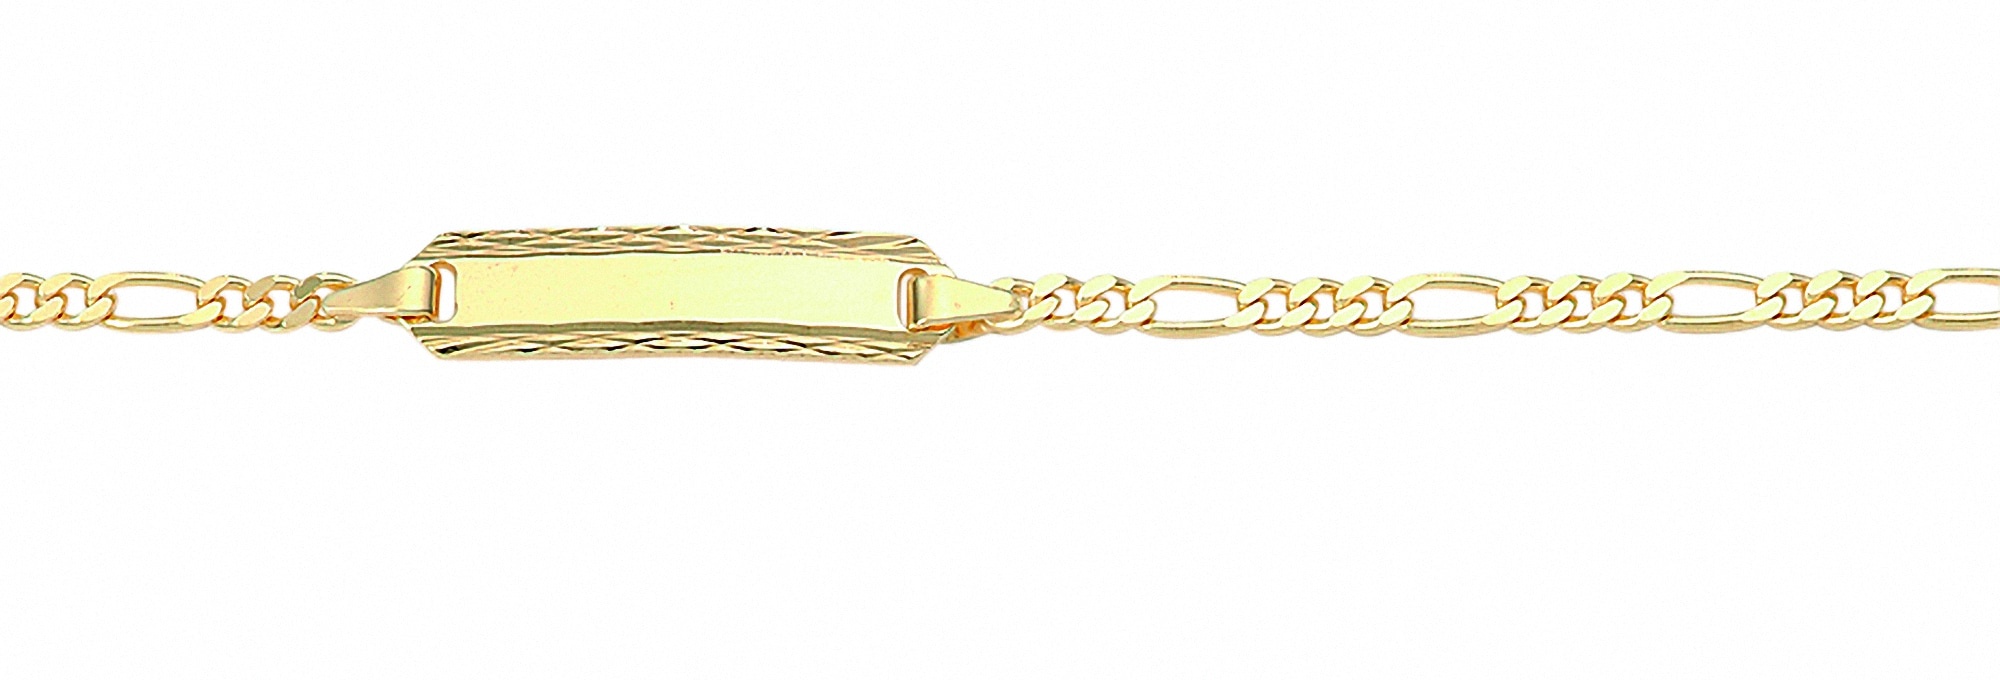 Goldarmband ADELIA ́S "Damen Goldschmuck 333 Gold Figaro Armband 16 cm" Armbänder Gr. 16, Gelbgold 333, goldfarben (gold) Damen Armbänder Gold